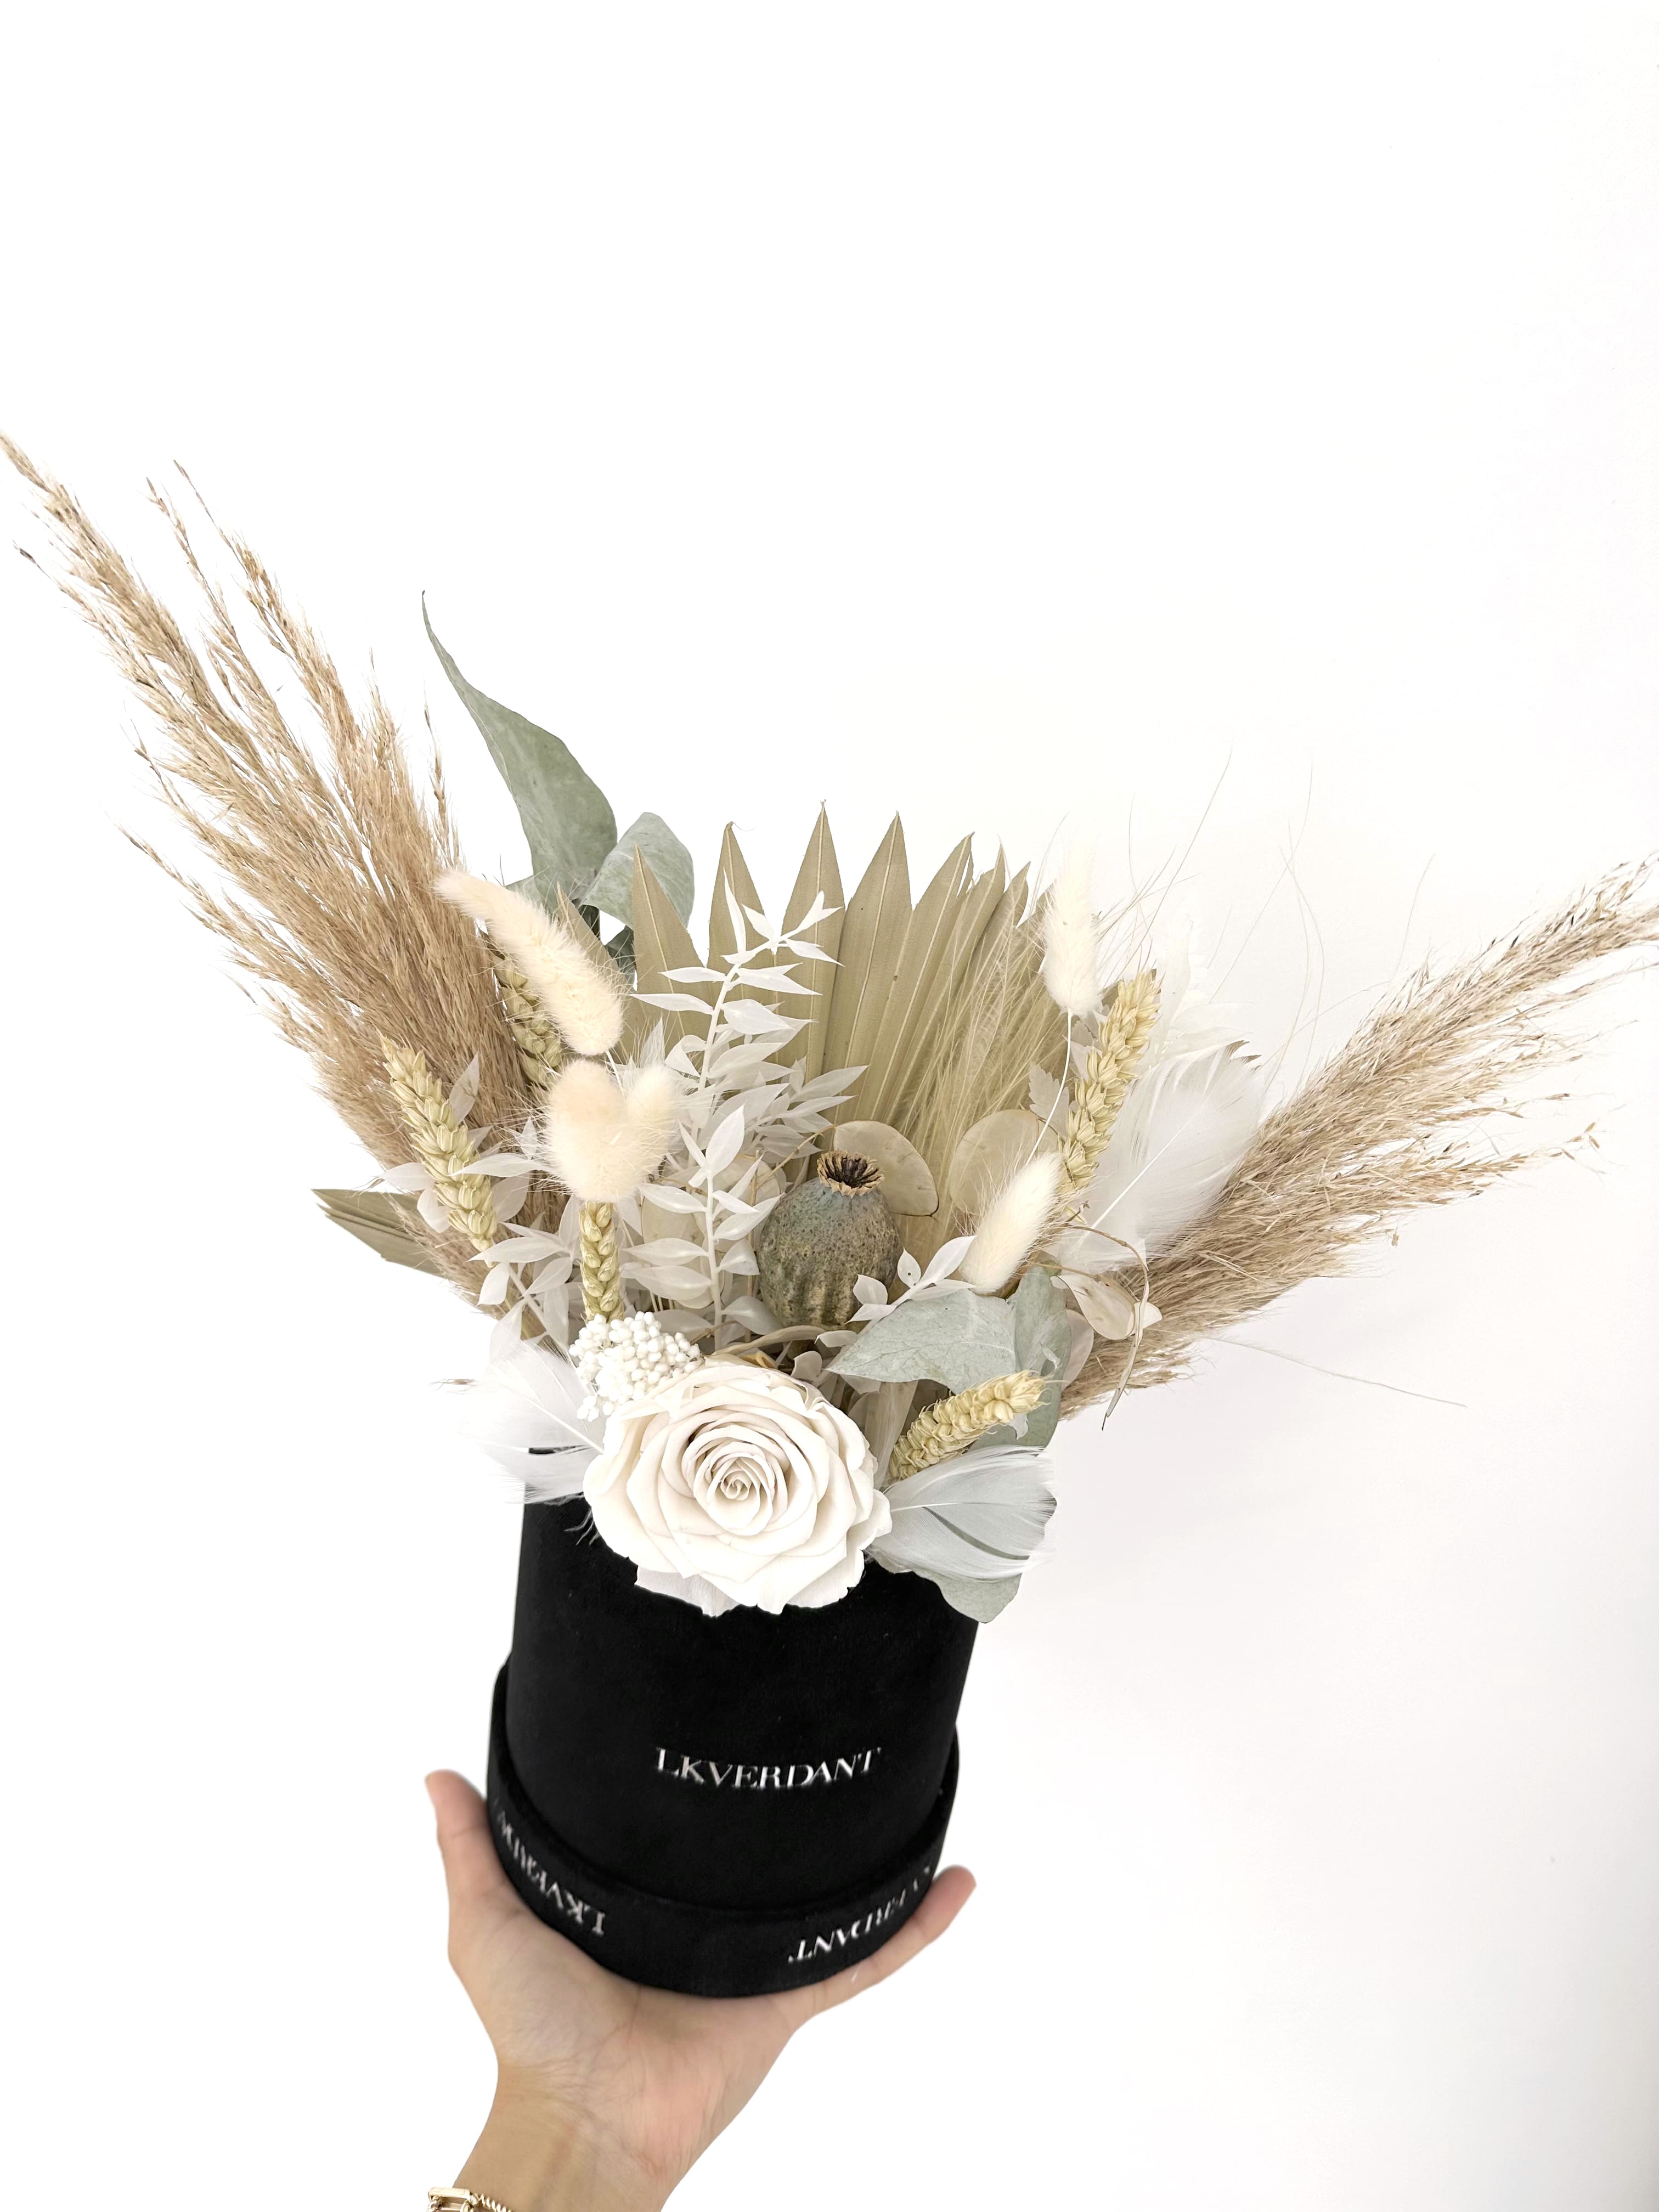 The Dawn Dried Hatbox Flowers - LK VERDANT